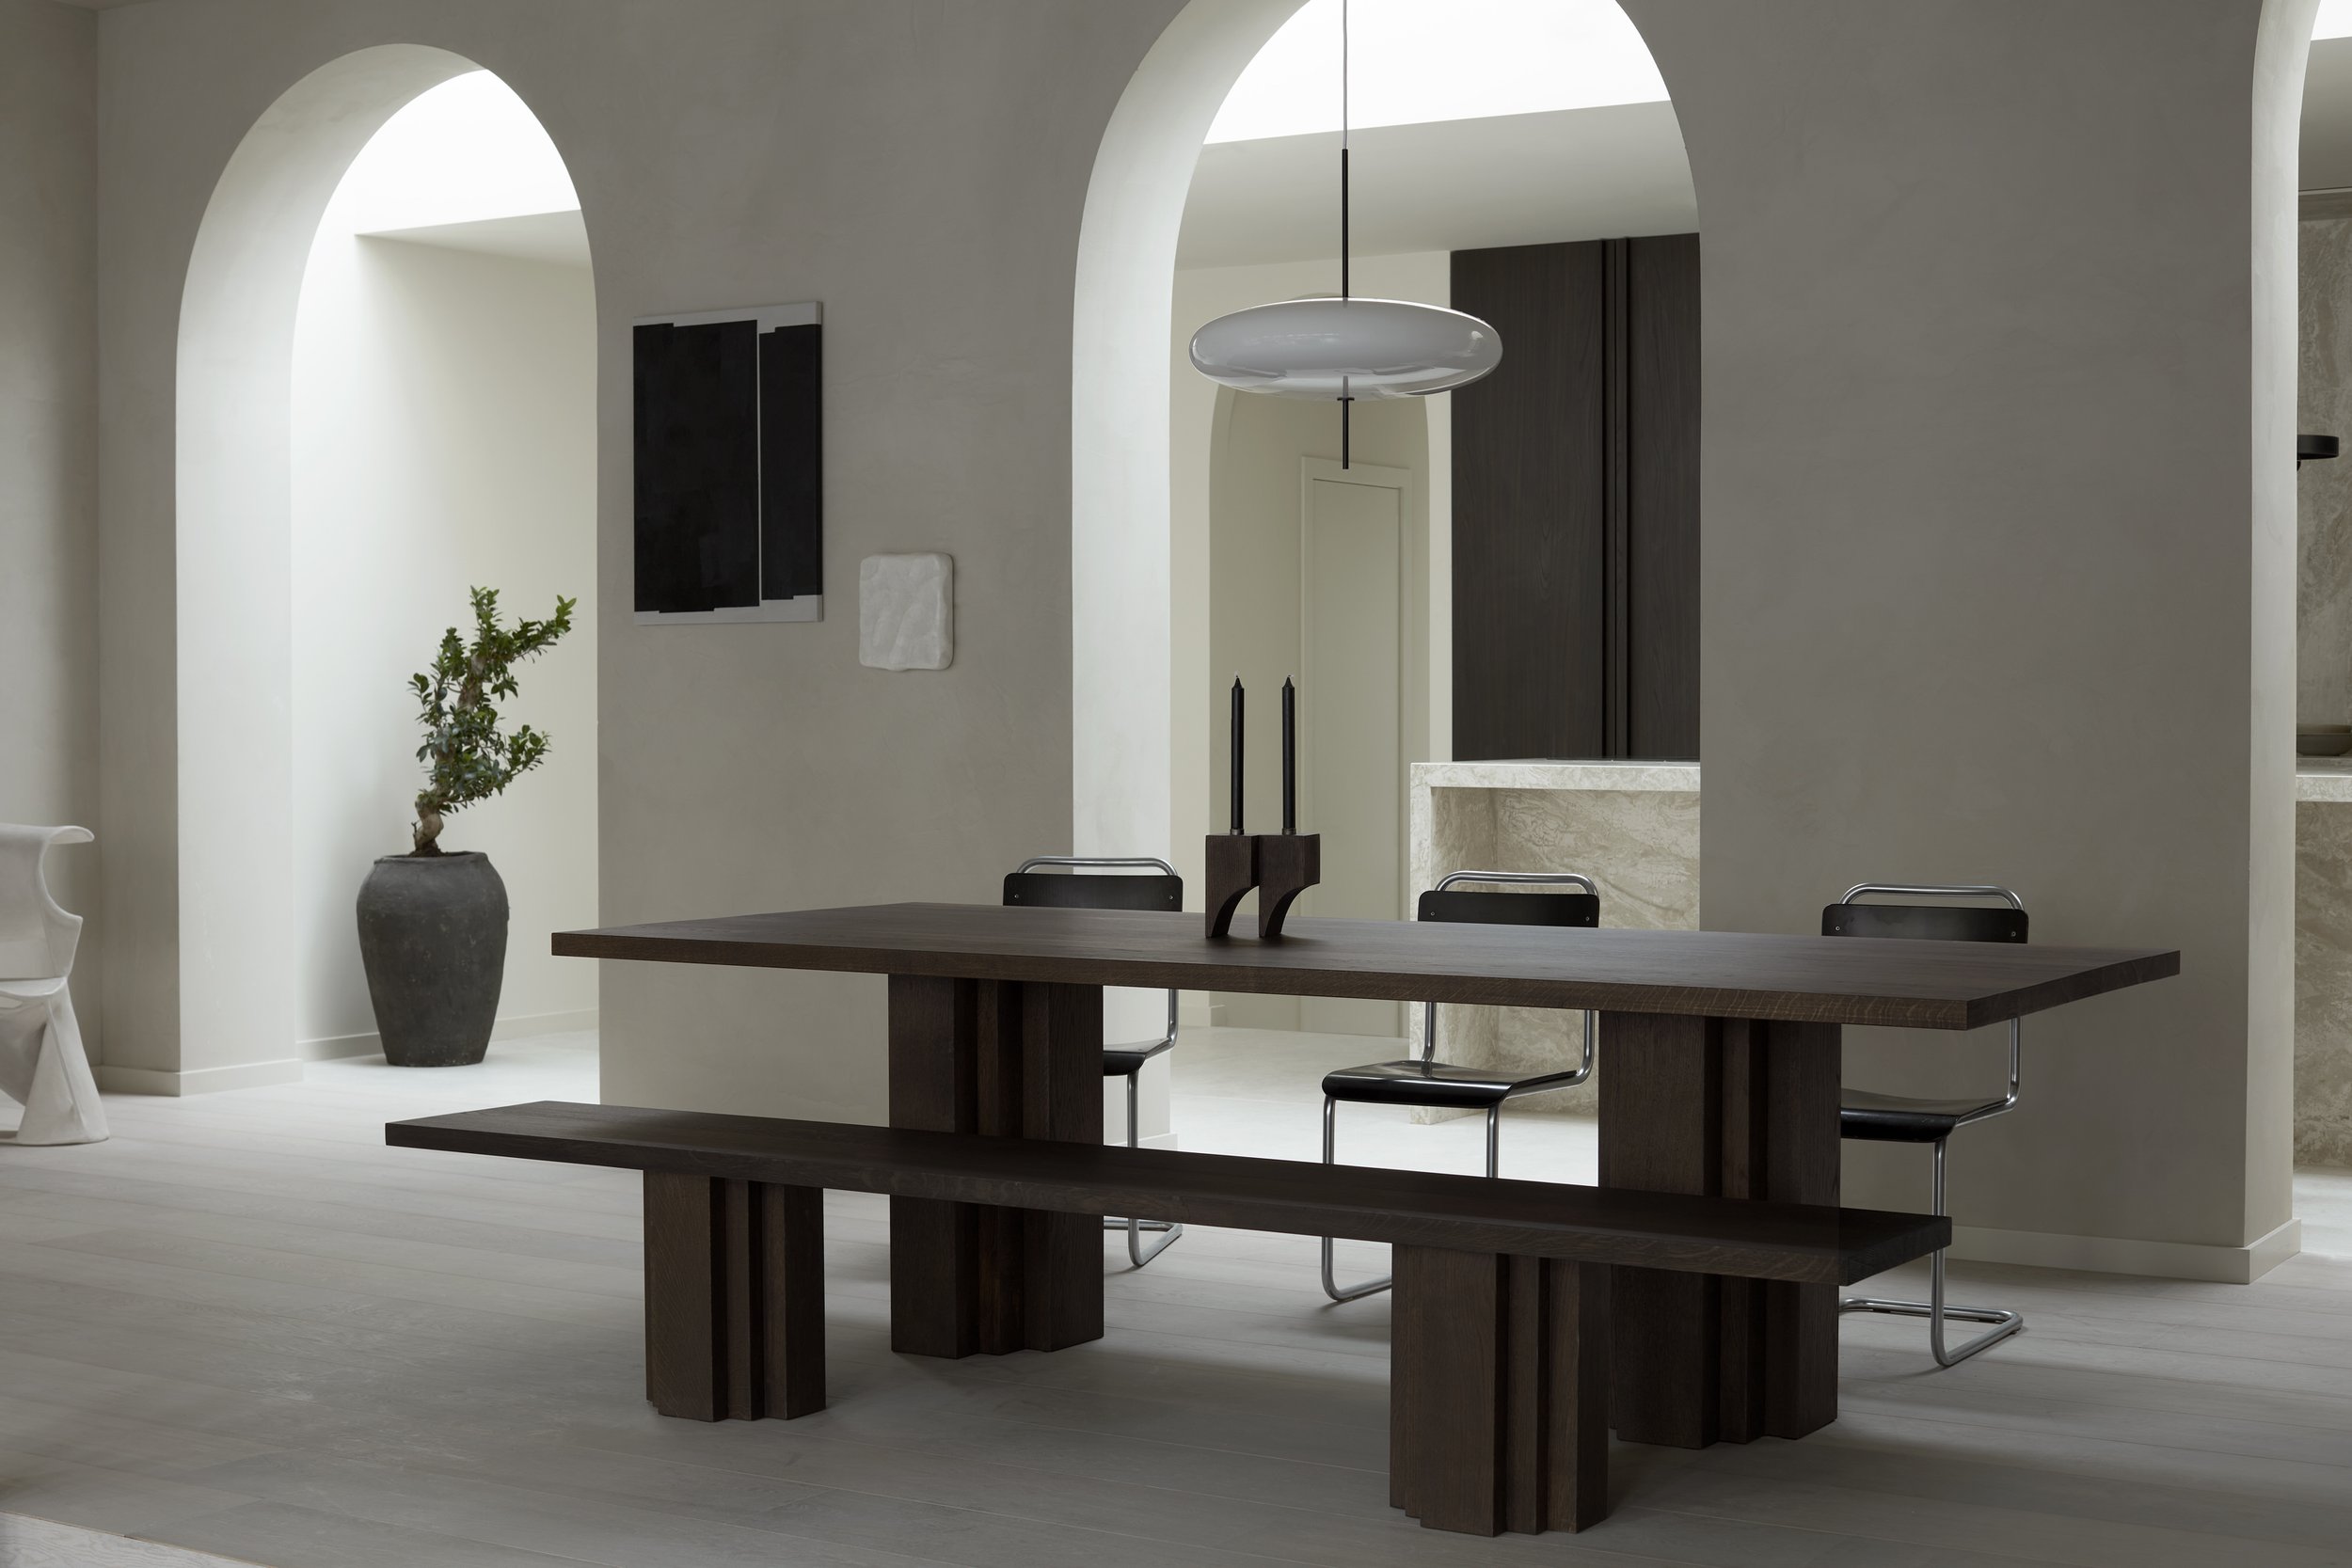 Brut Table and Bench - Oak Dark Brown - Full set - styled setting - Achtergracht - photo by Thomas van Schaik..jpg